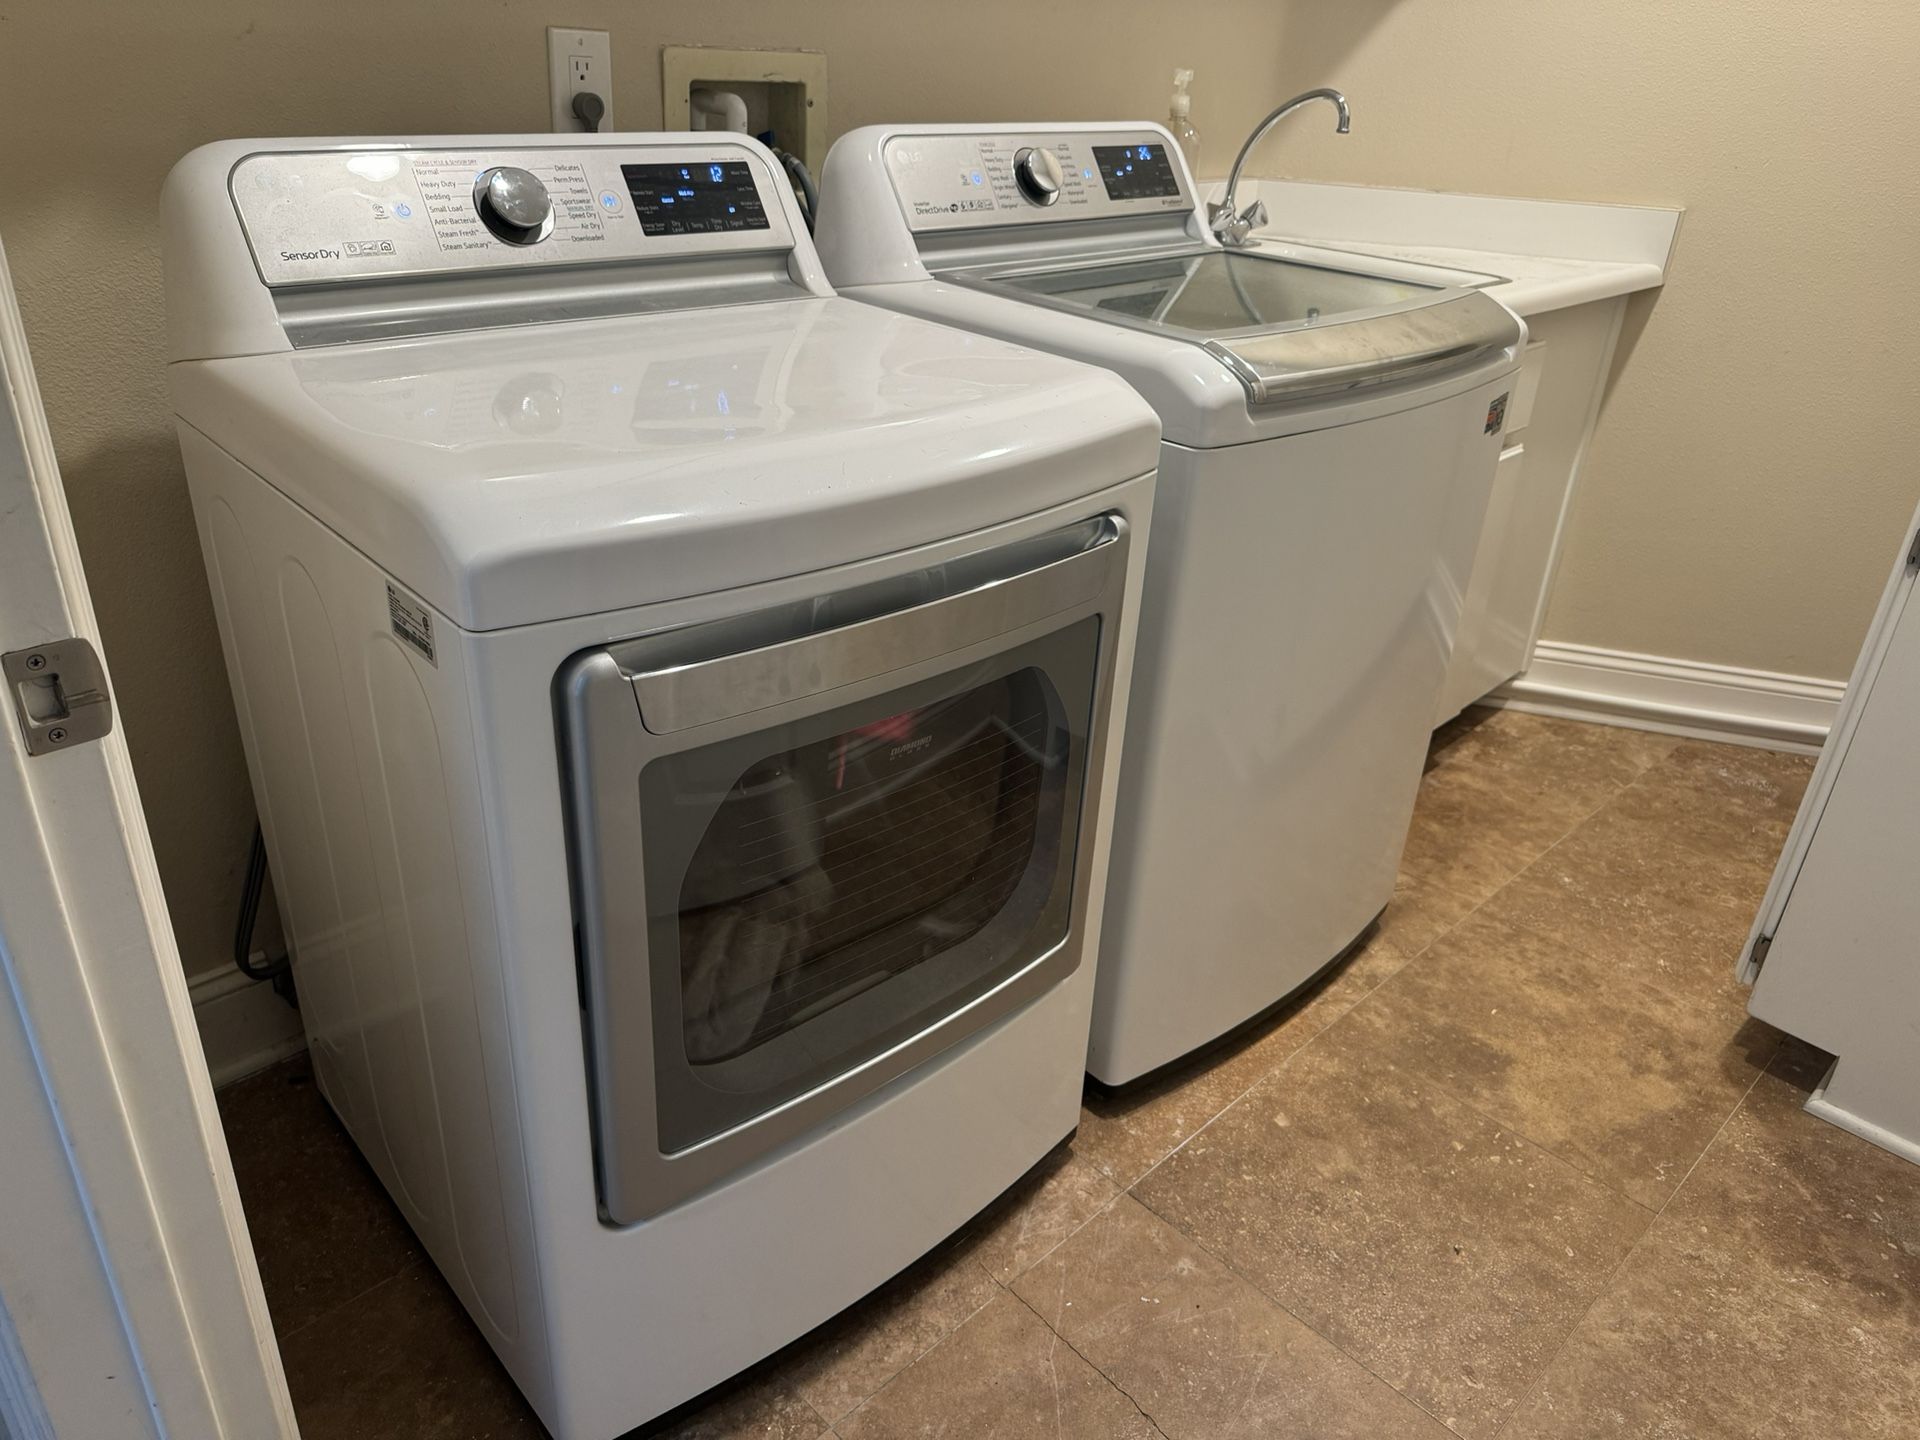 LG Washer & Dryer Set